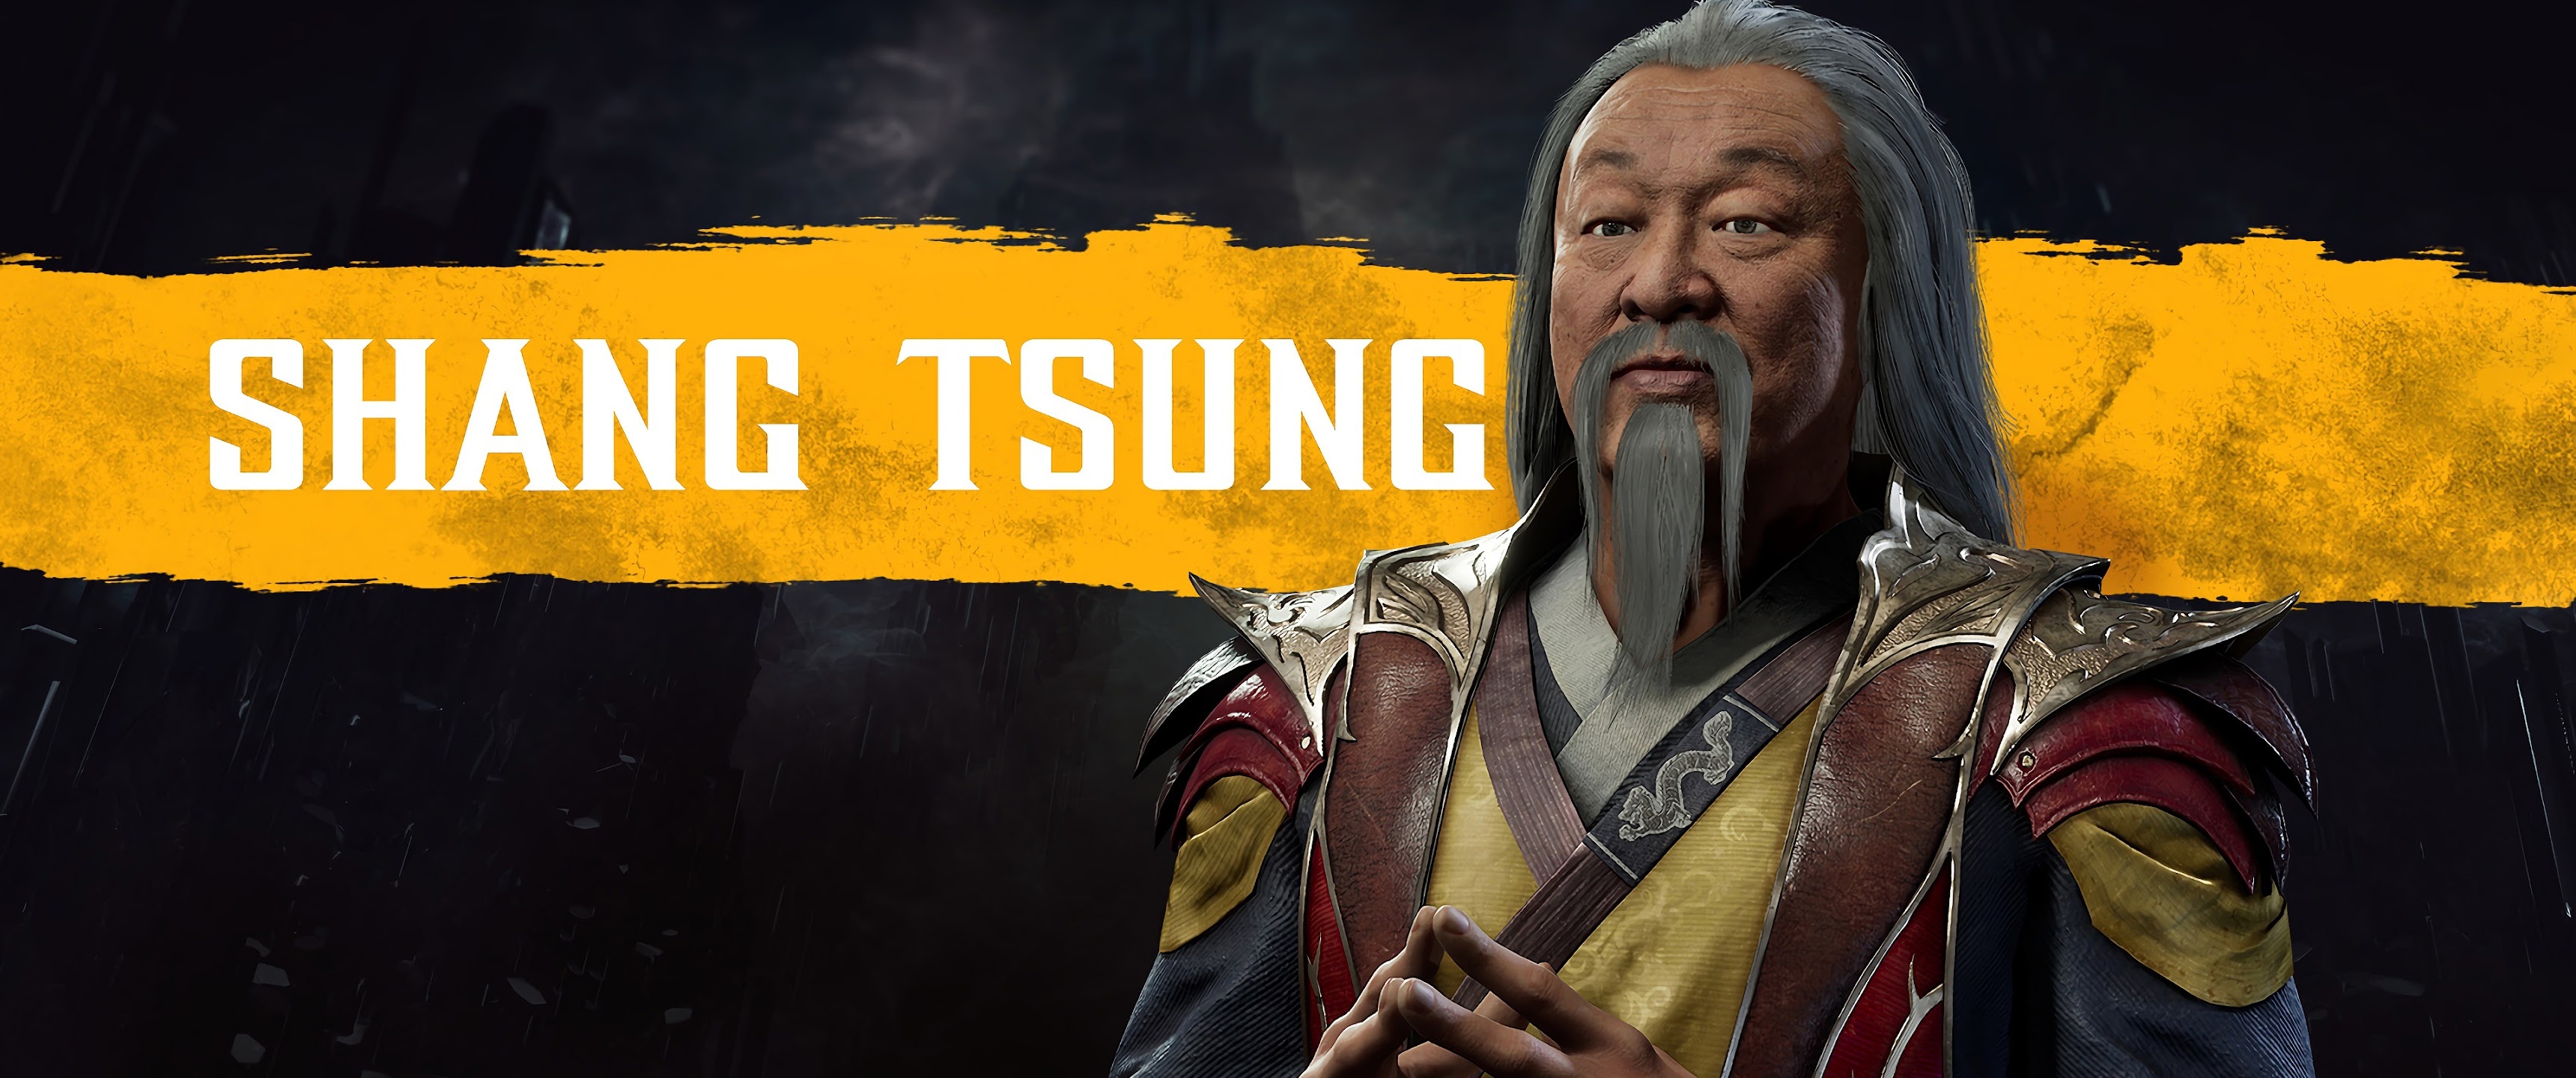 Shang Tsung, Mortal Kombat 11 PC, Powerful depiction, 4K wallpaper, 3440x1440 Dual Screen Desktop